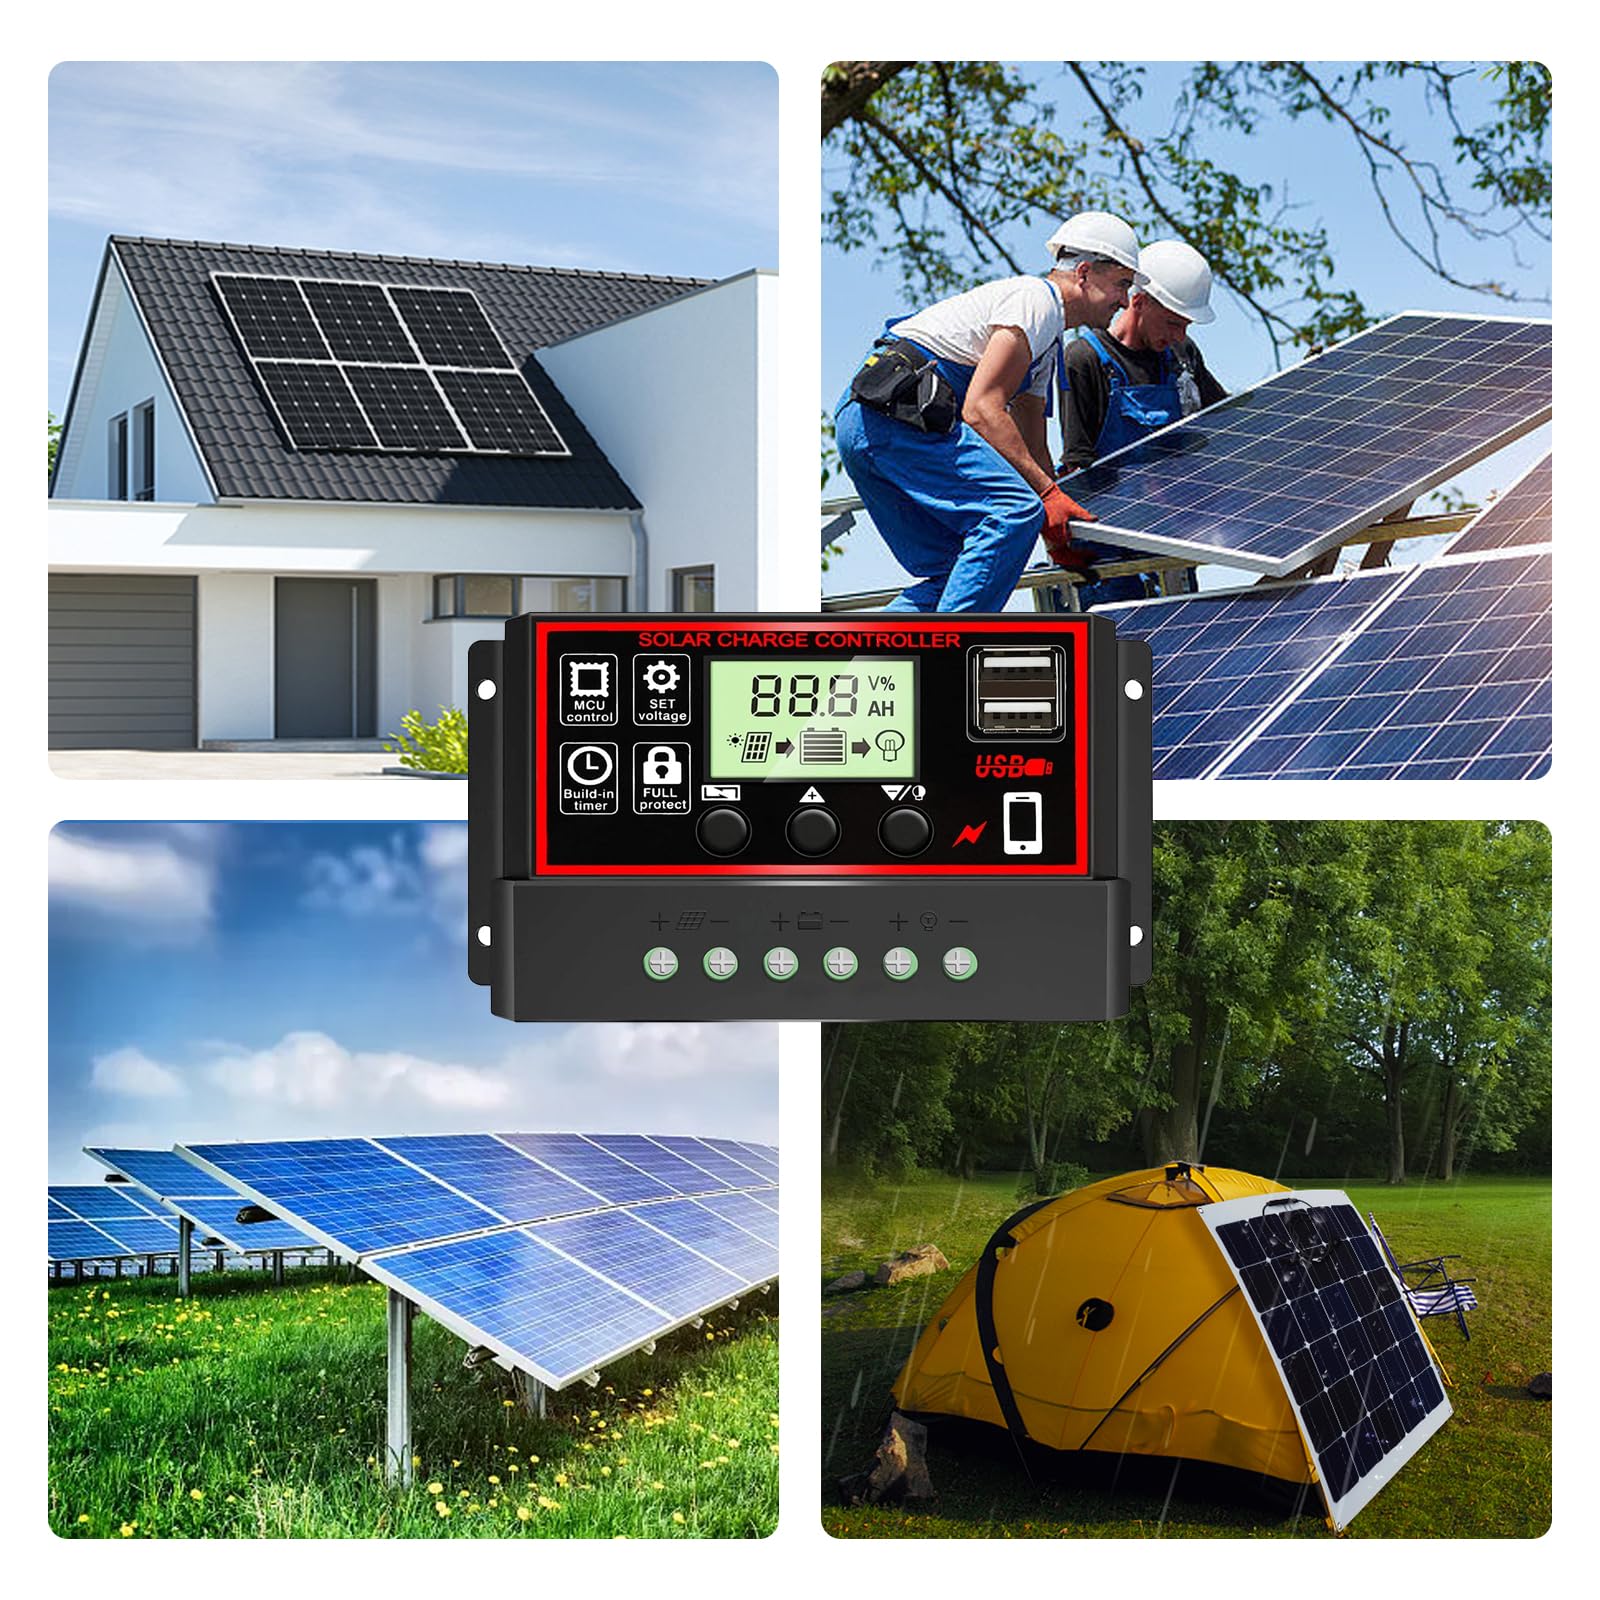 Himino 10A Solar Charge Controller,Solar Panel Battery Intelligent Regulator with USB Port Display 12V/24V (Black)